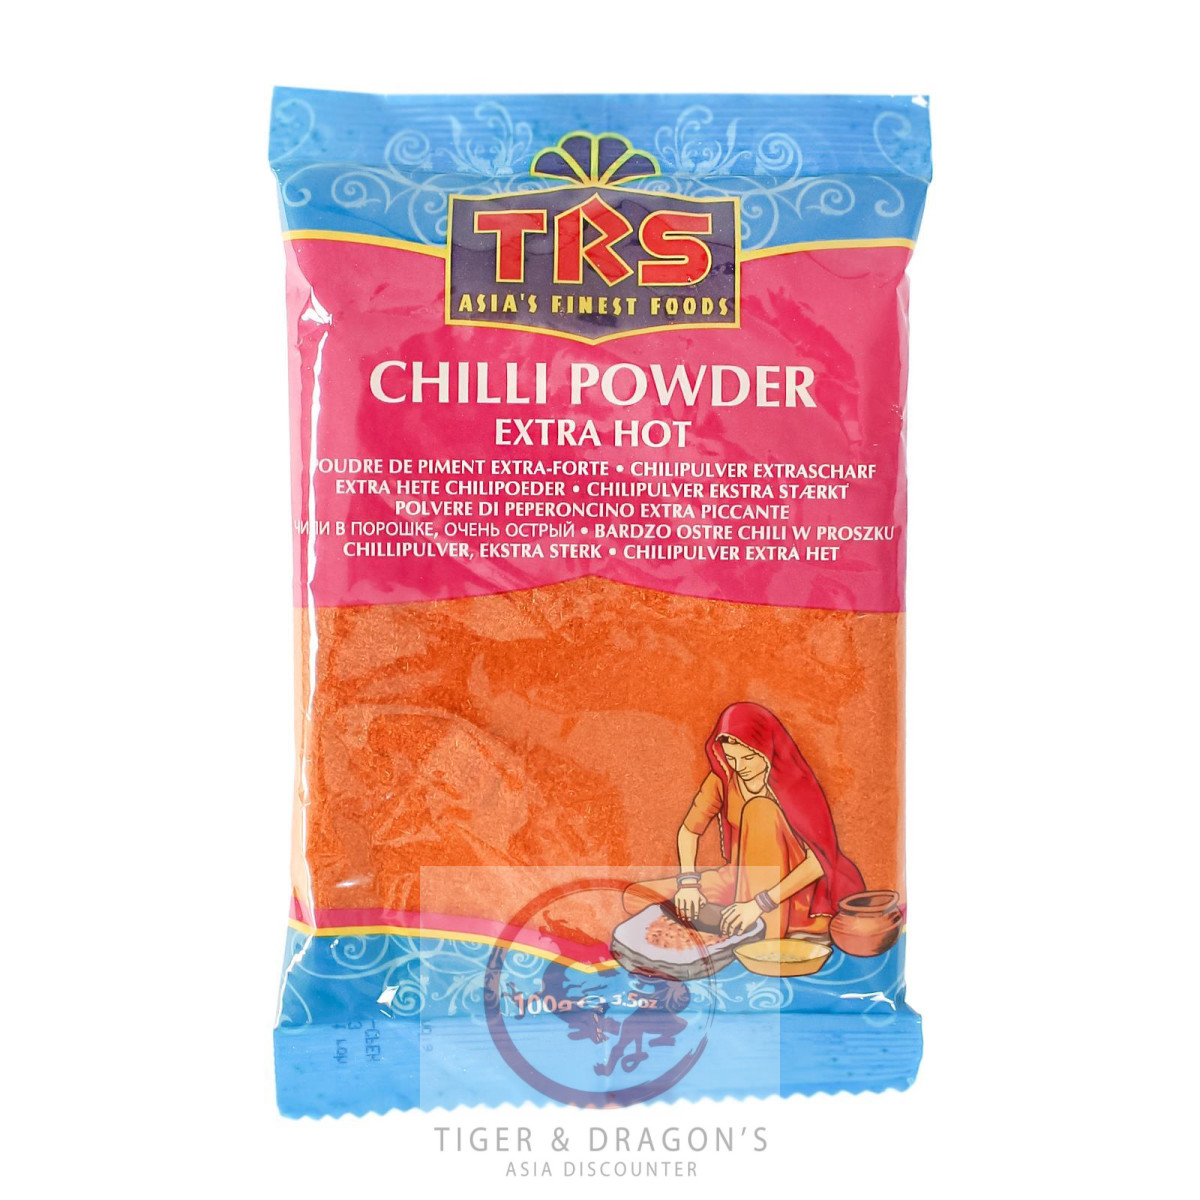 TRS Chilli Powder extra hot 100g